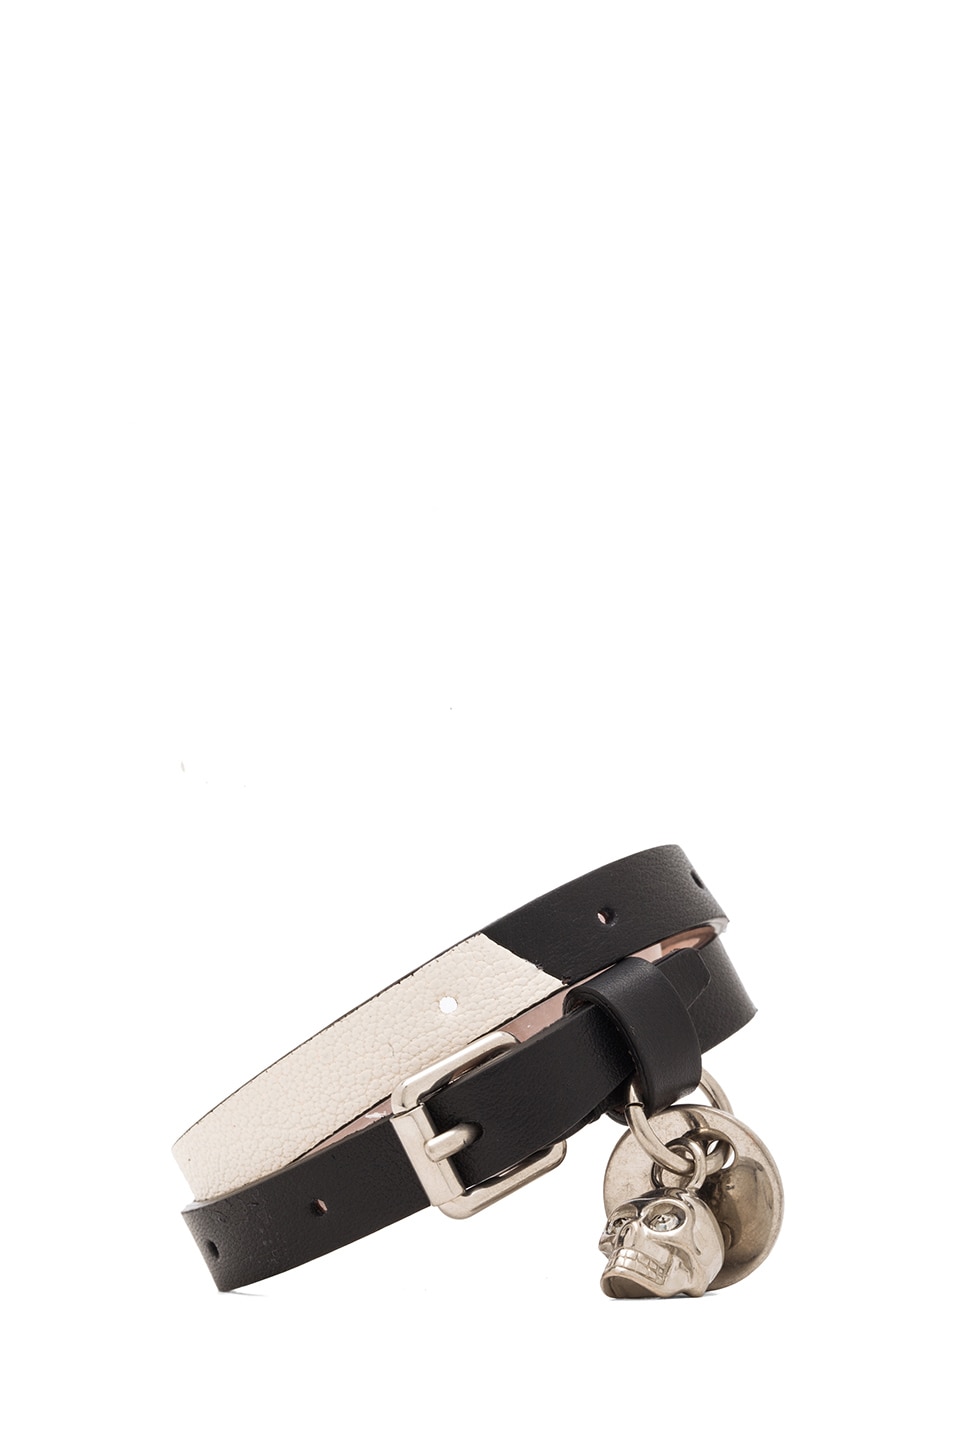 Alexander McQueen Double Wrap Leather Bracelet in Black & White | FWRD